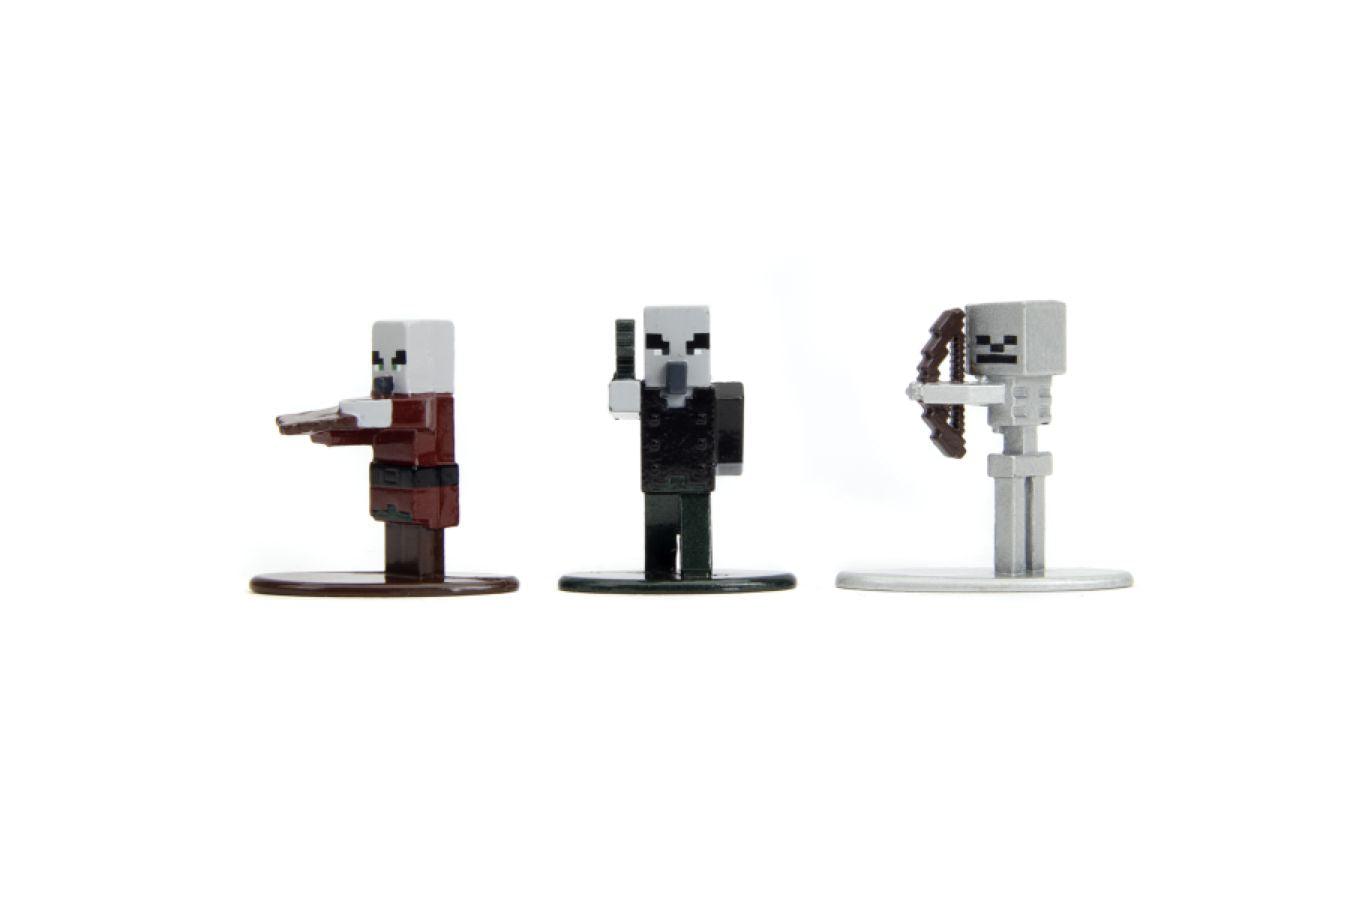 JAD34466 Minecraft - Caves & Cliffs Nano MetalFig Series 10 18-Pack - Jada Toys - Titan Pop Culture